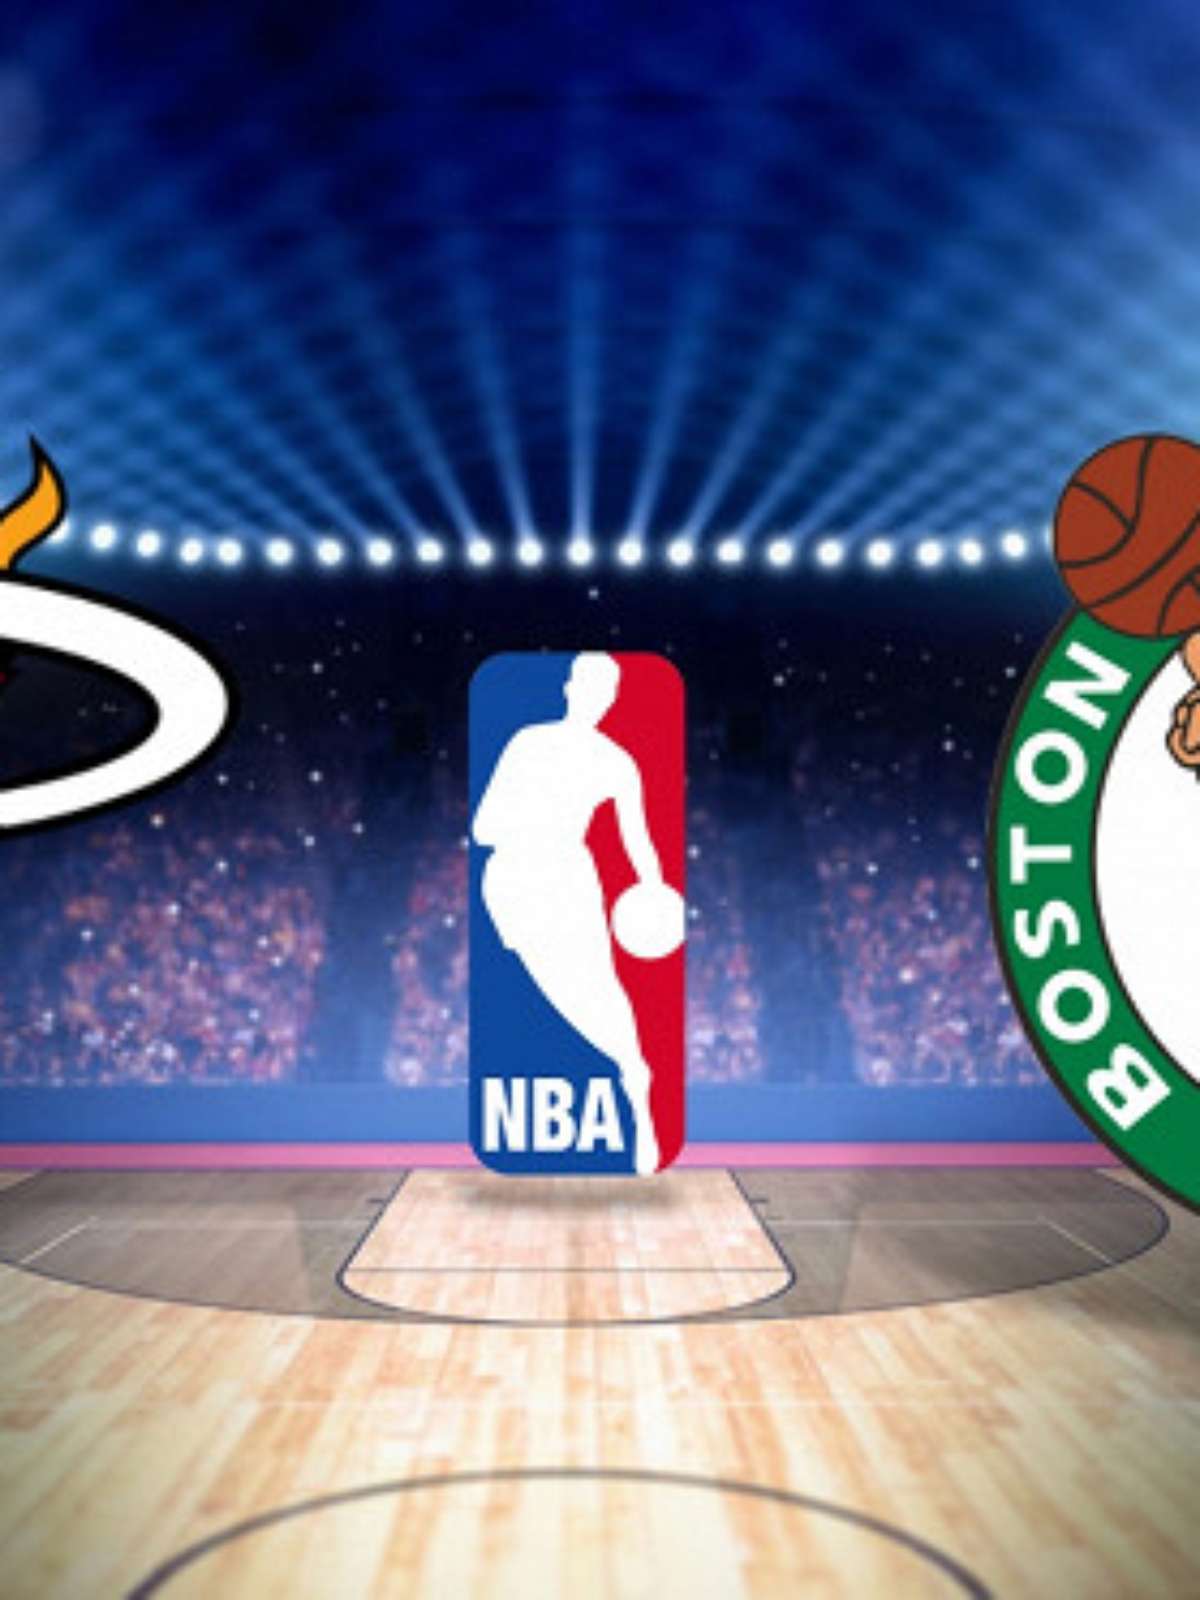 Boston Celtics x Miami Heat: saiba onde assistir jogo decisivo da NBA